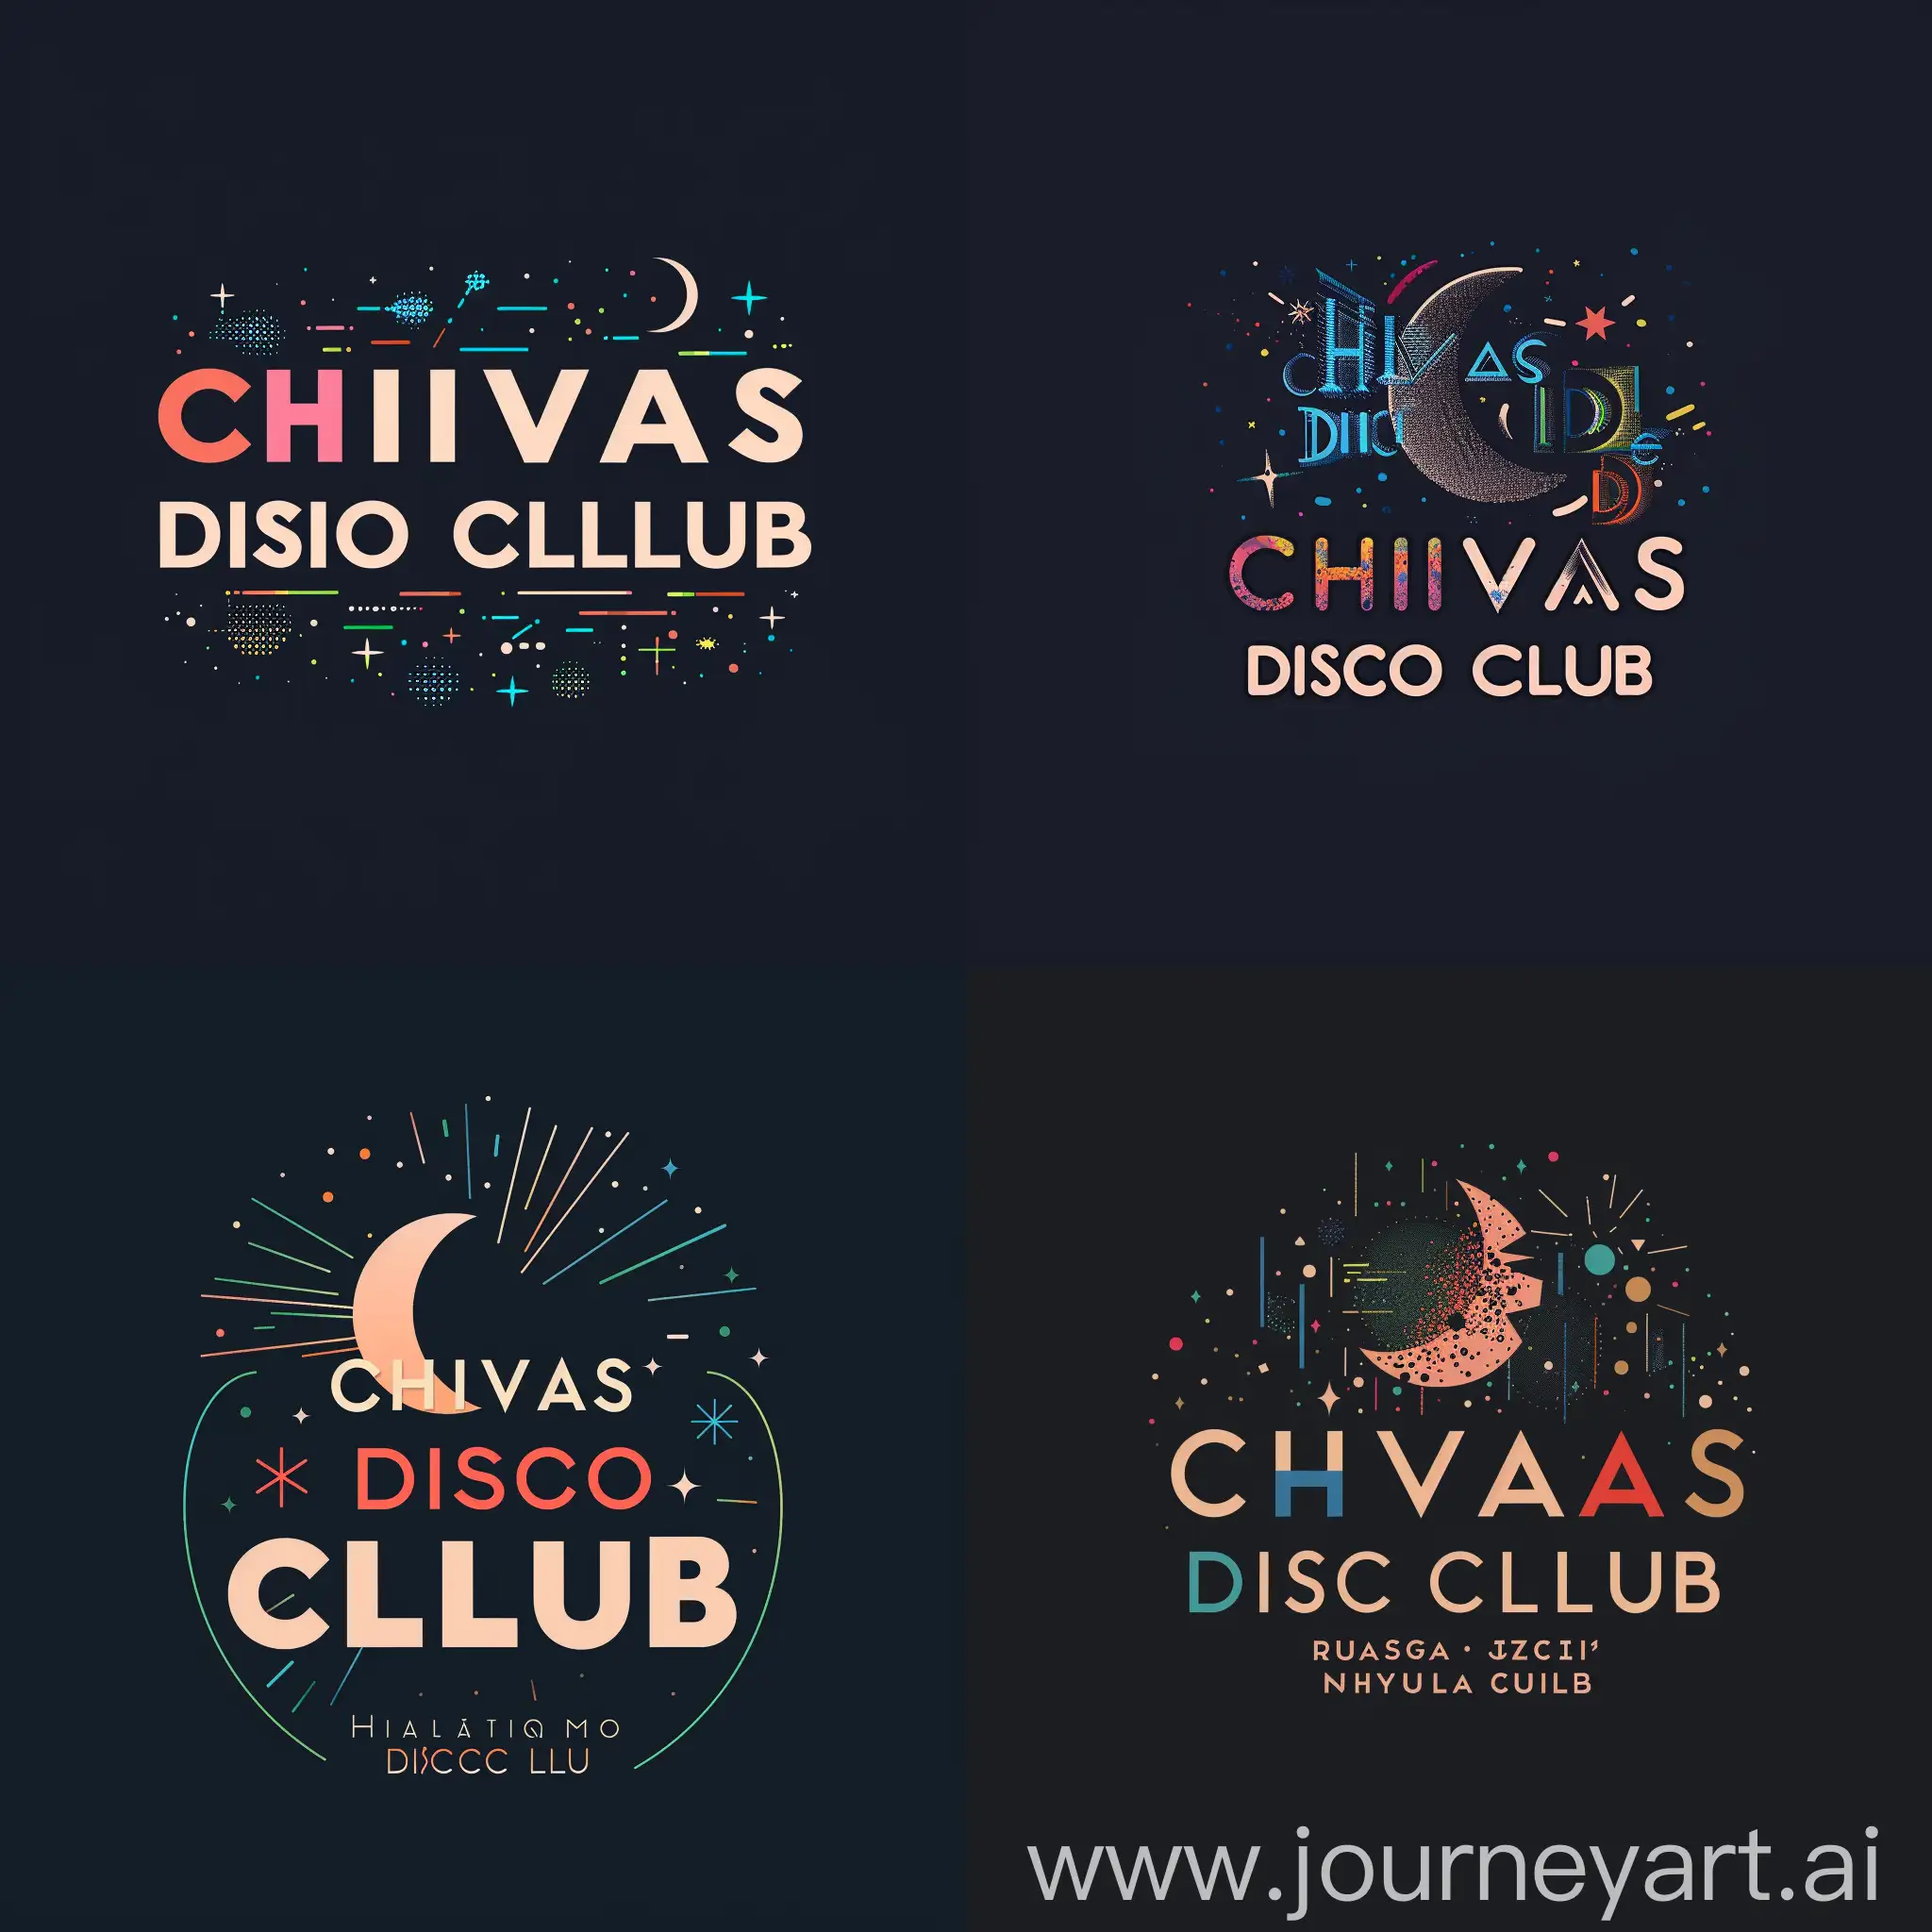 Chivas-Disco-Club-Logo-Minimalist-and-Elegant-Nighttime-Atmosphere-Design